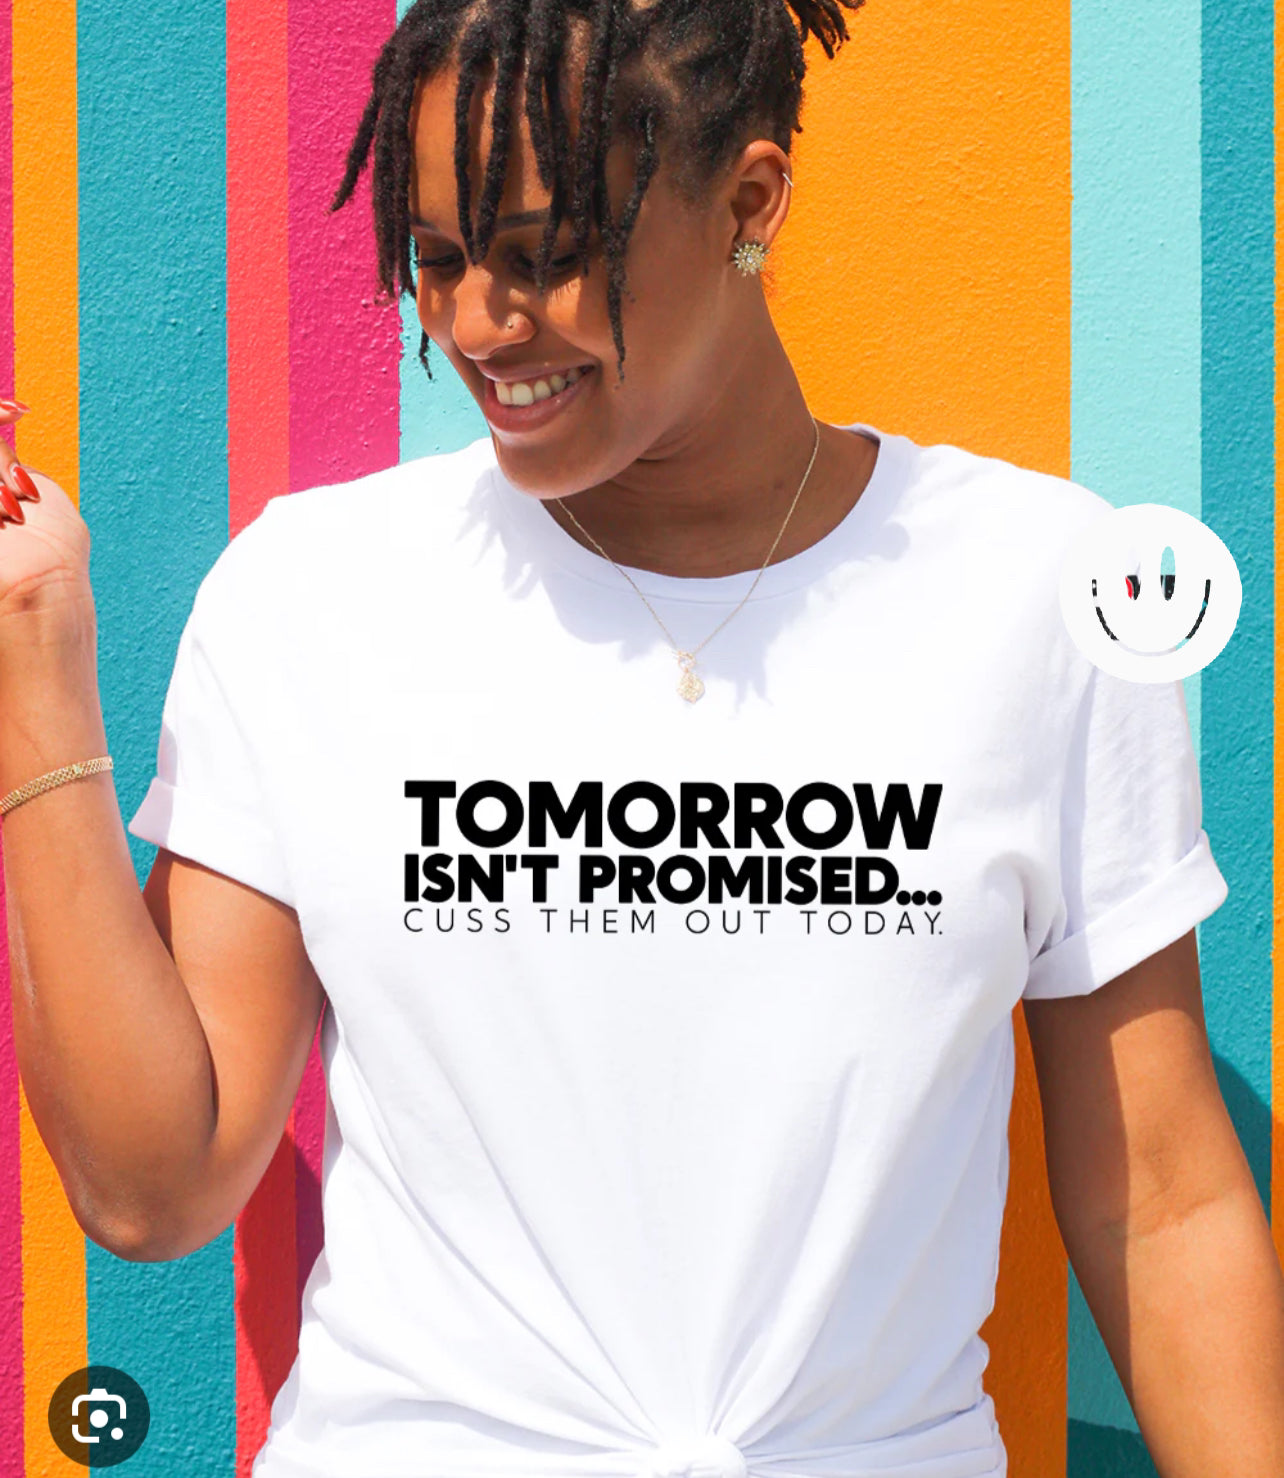 Tomorrow ain’t promised.